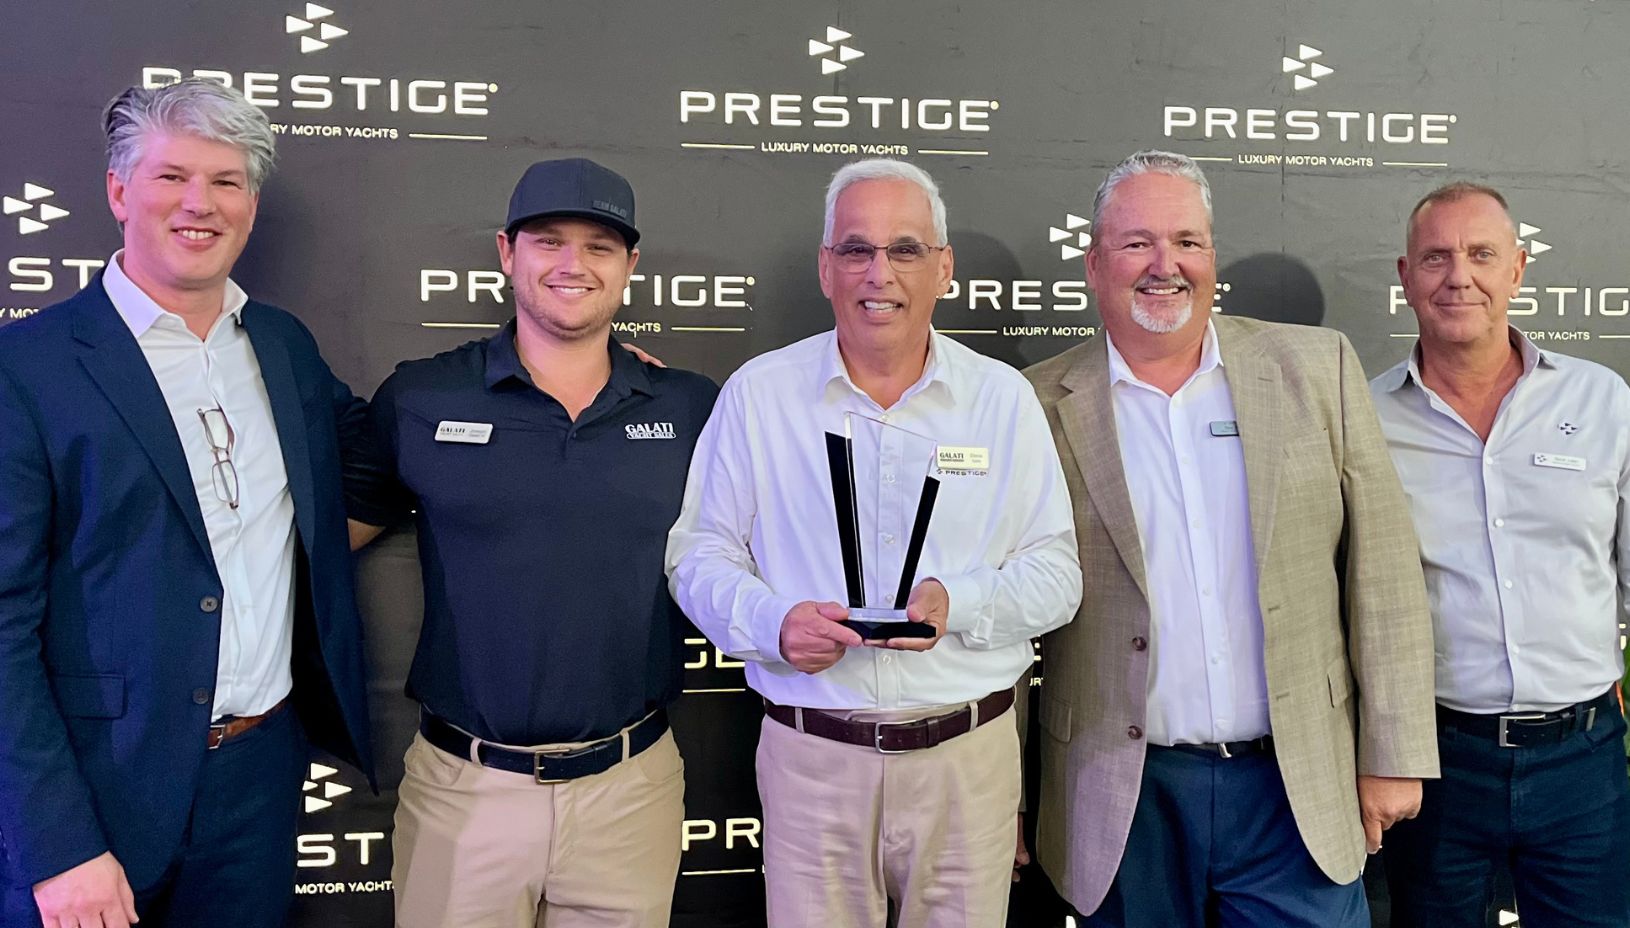 Galati Awarded Top Prestige Dealer Award